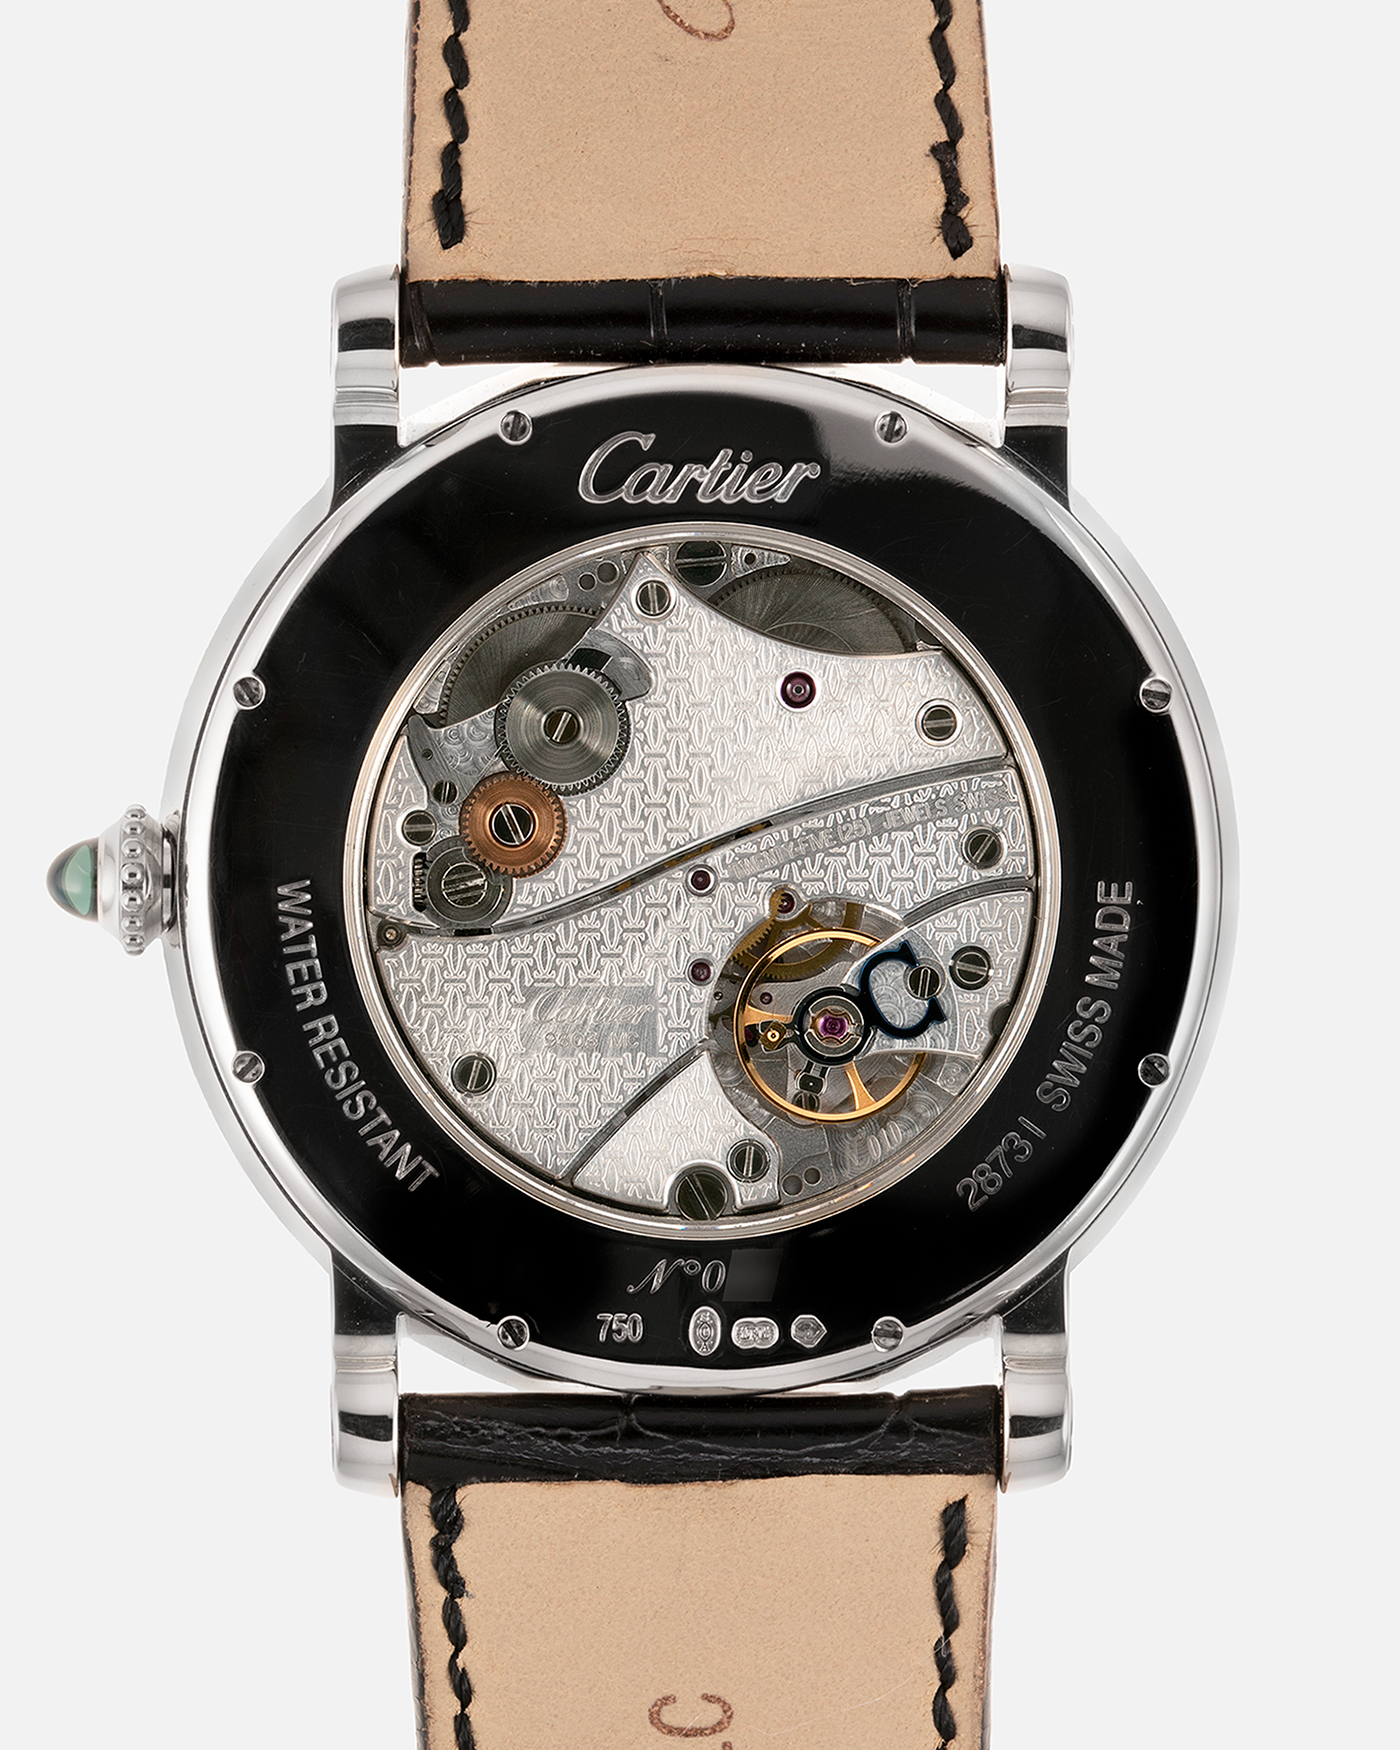 Brand: Cartier Year: 2007 Model: CPCP Rotonde Jour Et Nuit Material: Platinum Movement: Cal. 9903 MC Case Diameter: 42mm Strap: Black Cartier Alligator Strap with 18k White Gold Deployant